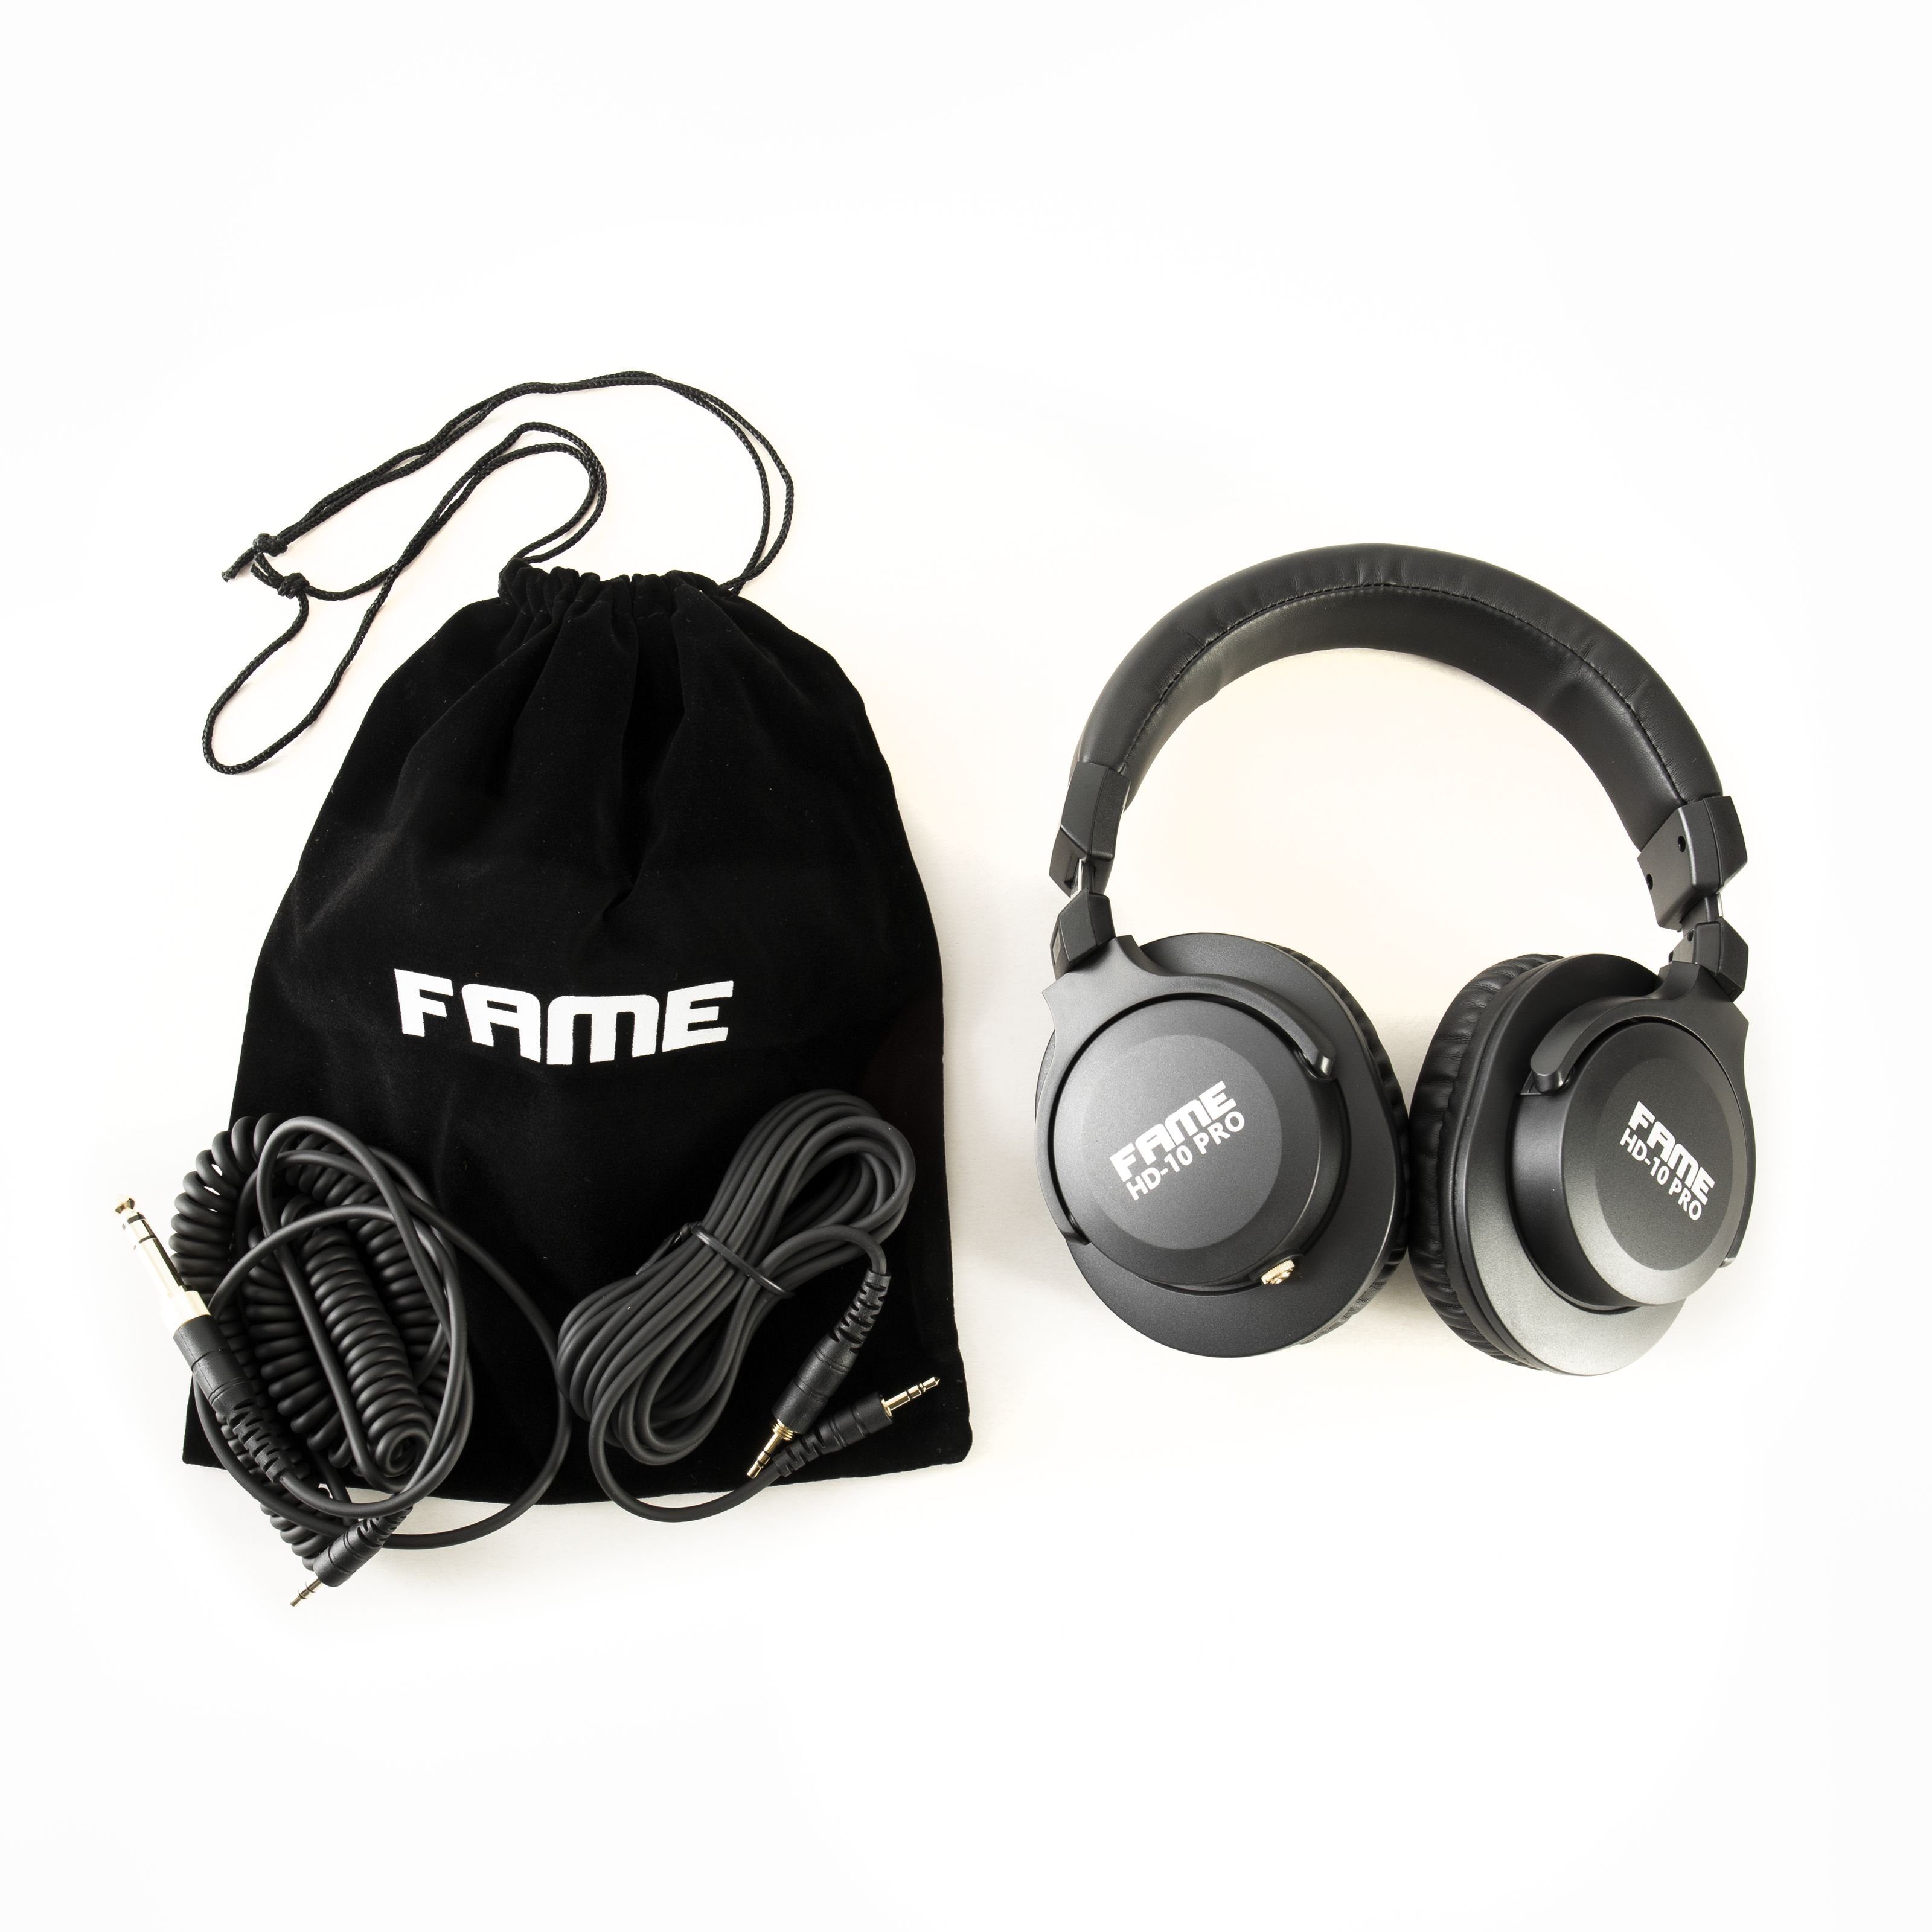 Fame (HD-10 Studio geschlossen) PRO Kopfhörer - Kopfhörer Audio